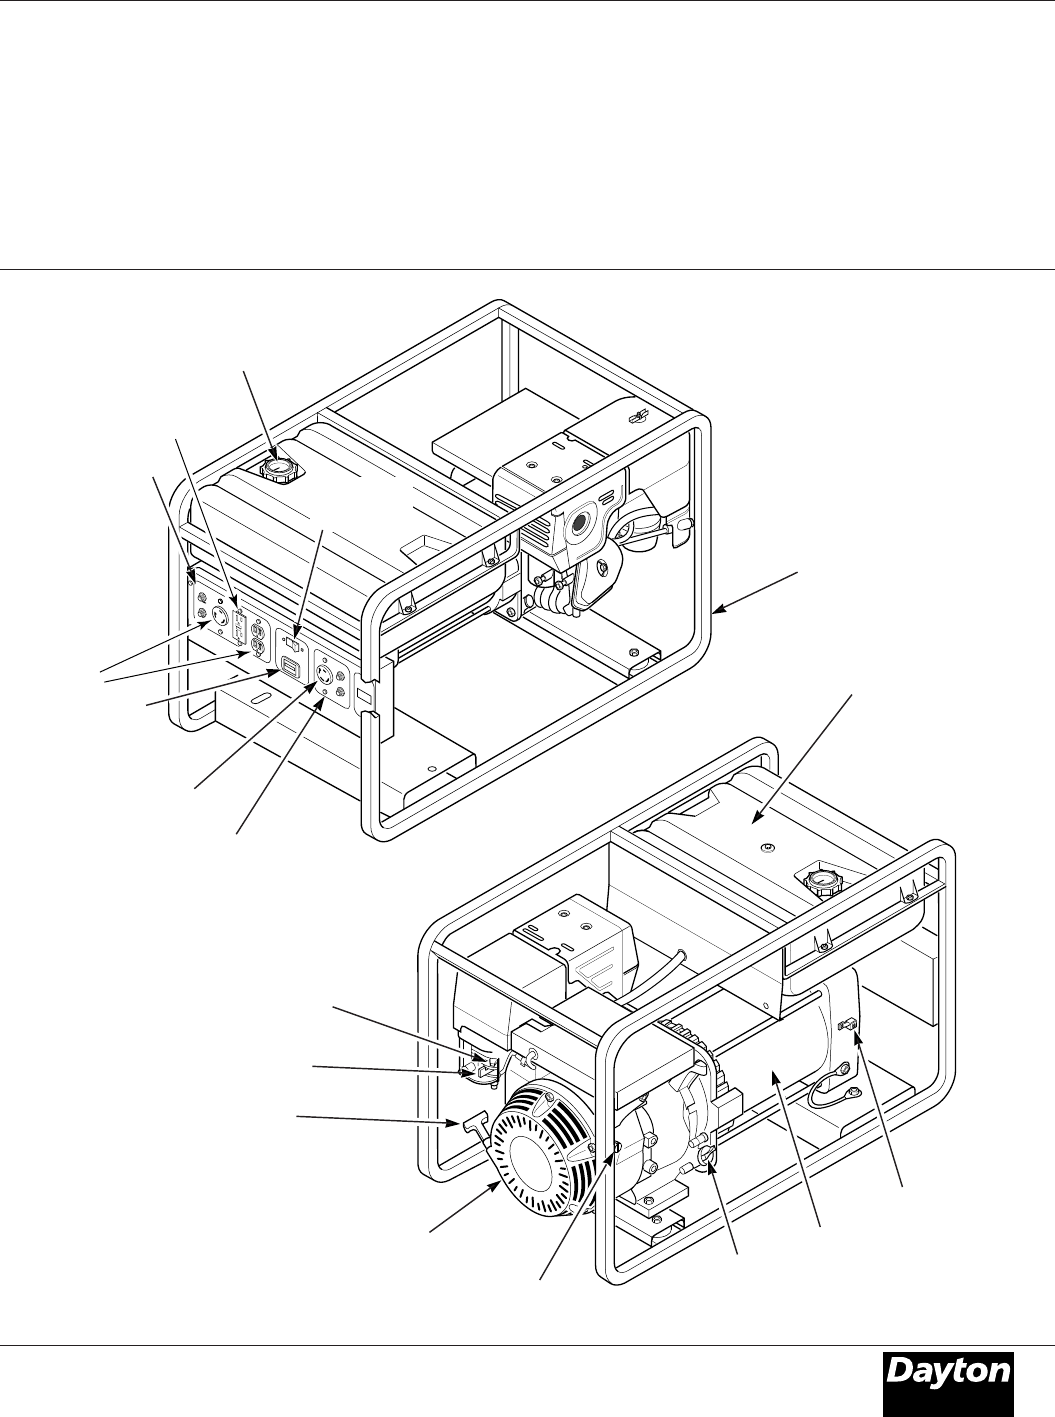 pincor generator manual